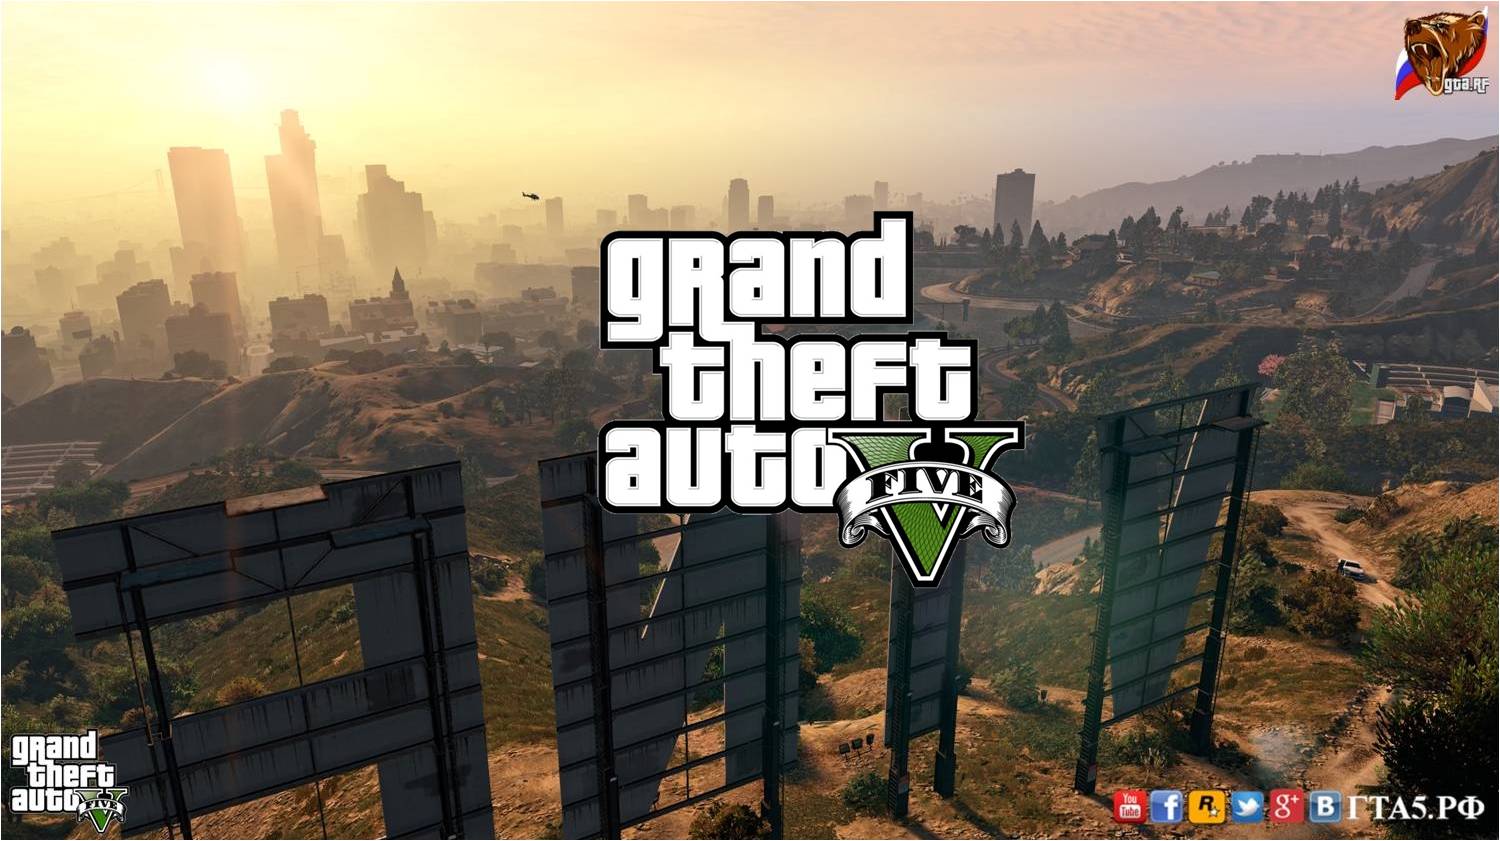 Grand Theft Auto V на PC-версии исправили проблемы с графикой.